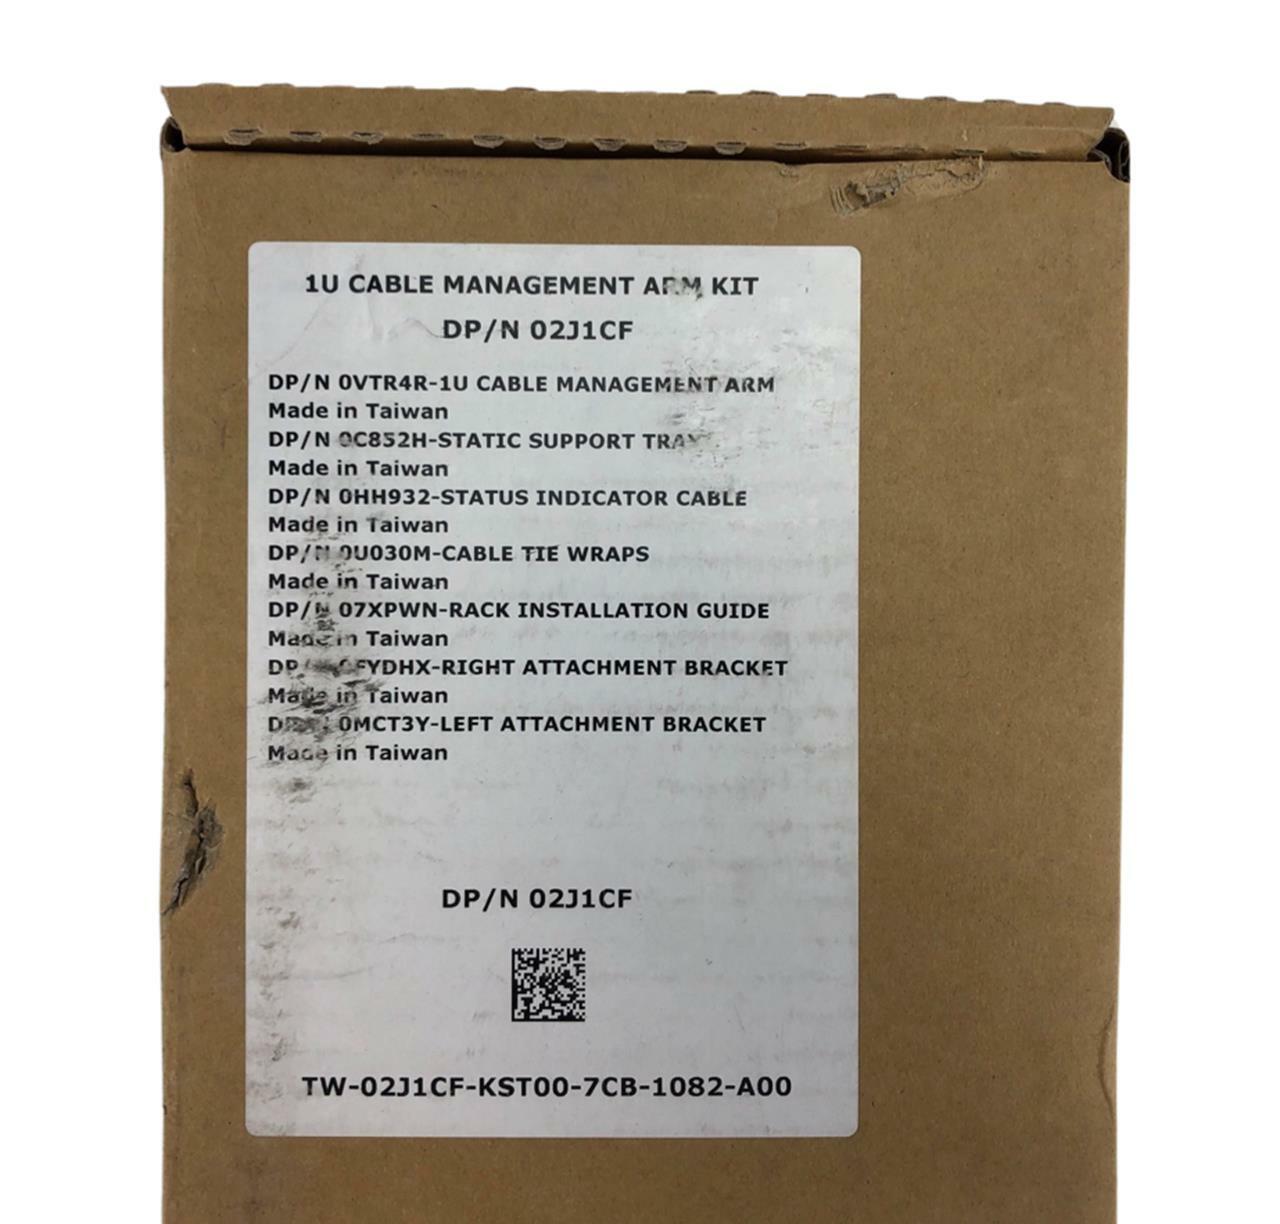 NEW - Open Box - Dell PowerEdge 1U 02J1CF Cable Management Arm Kit